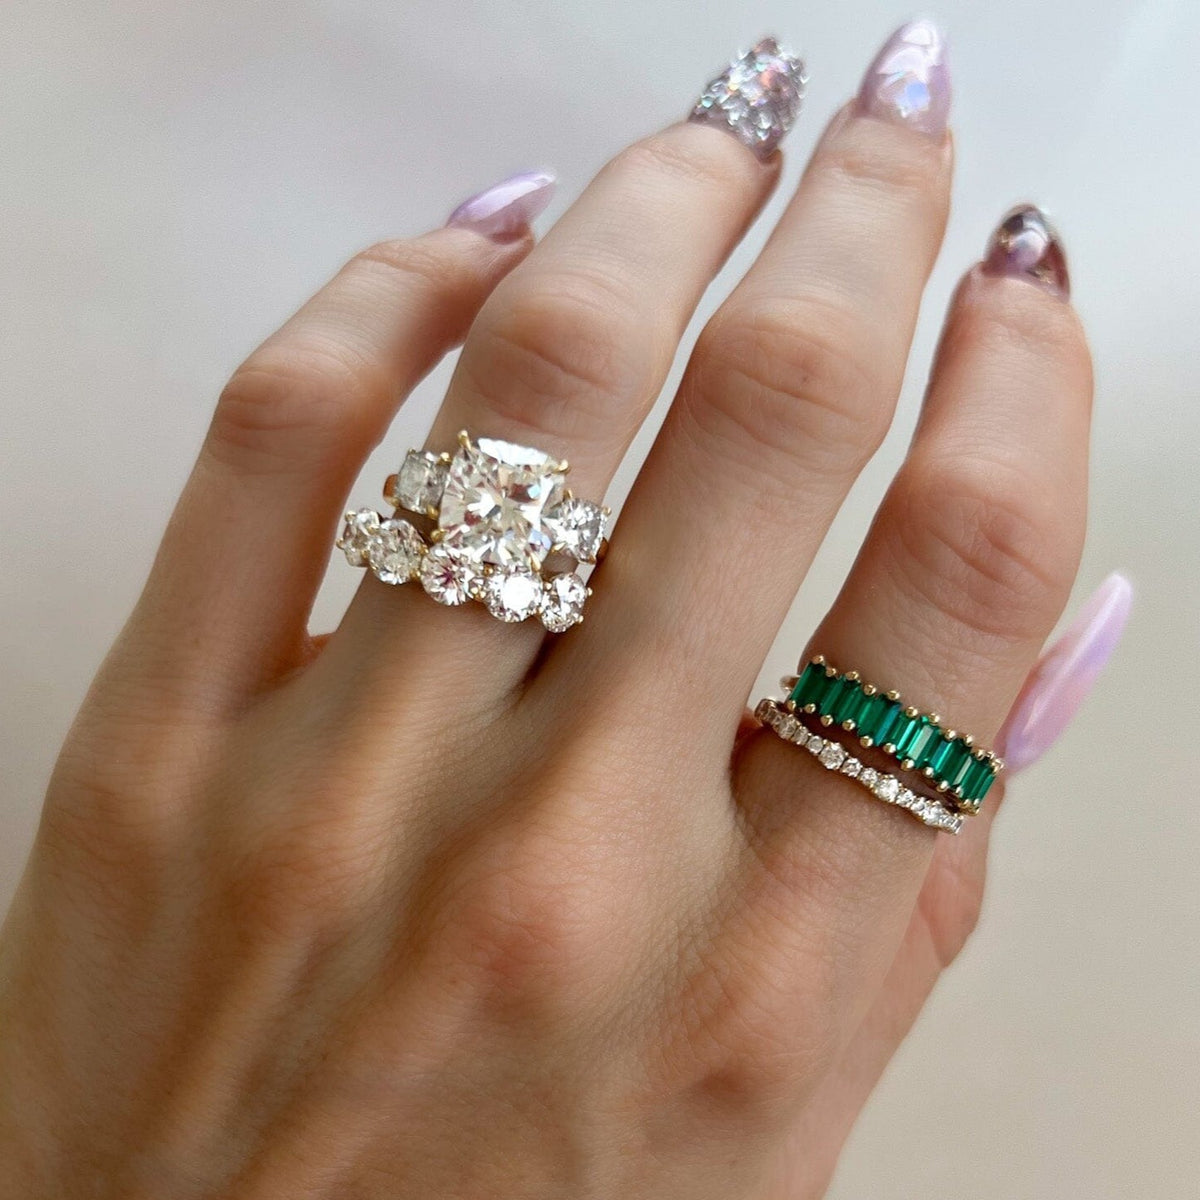 Rachel Reid Emerald Baguette Ring - Desires by Mikolay